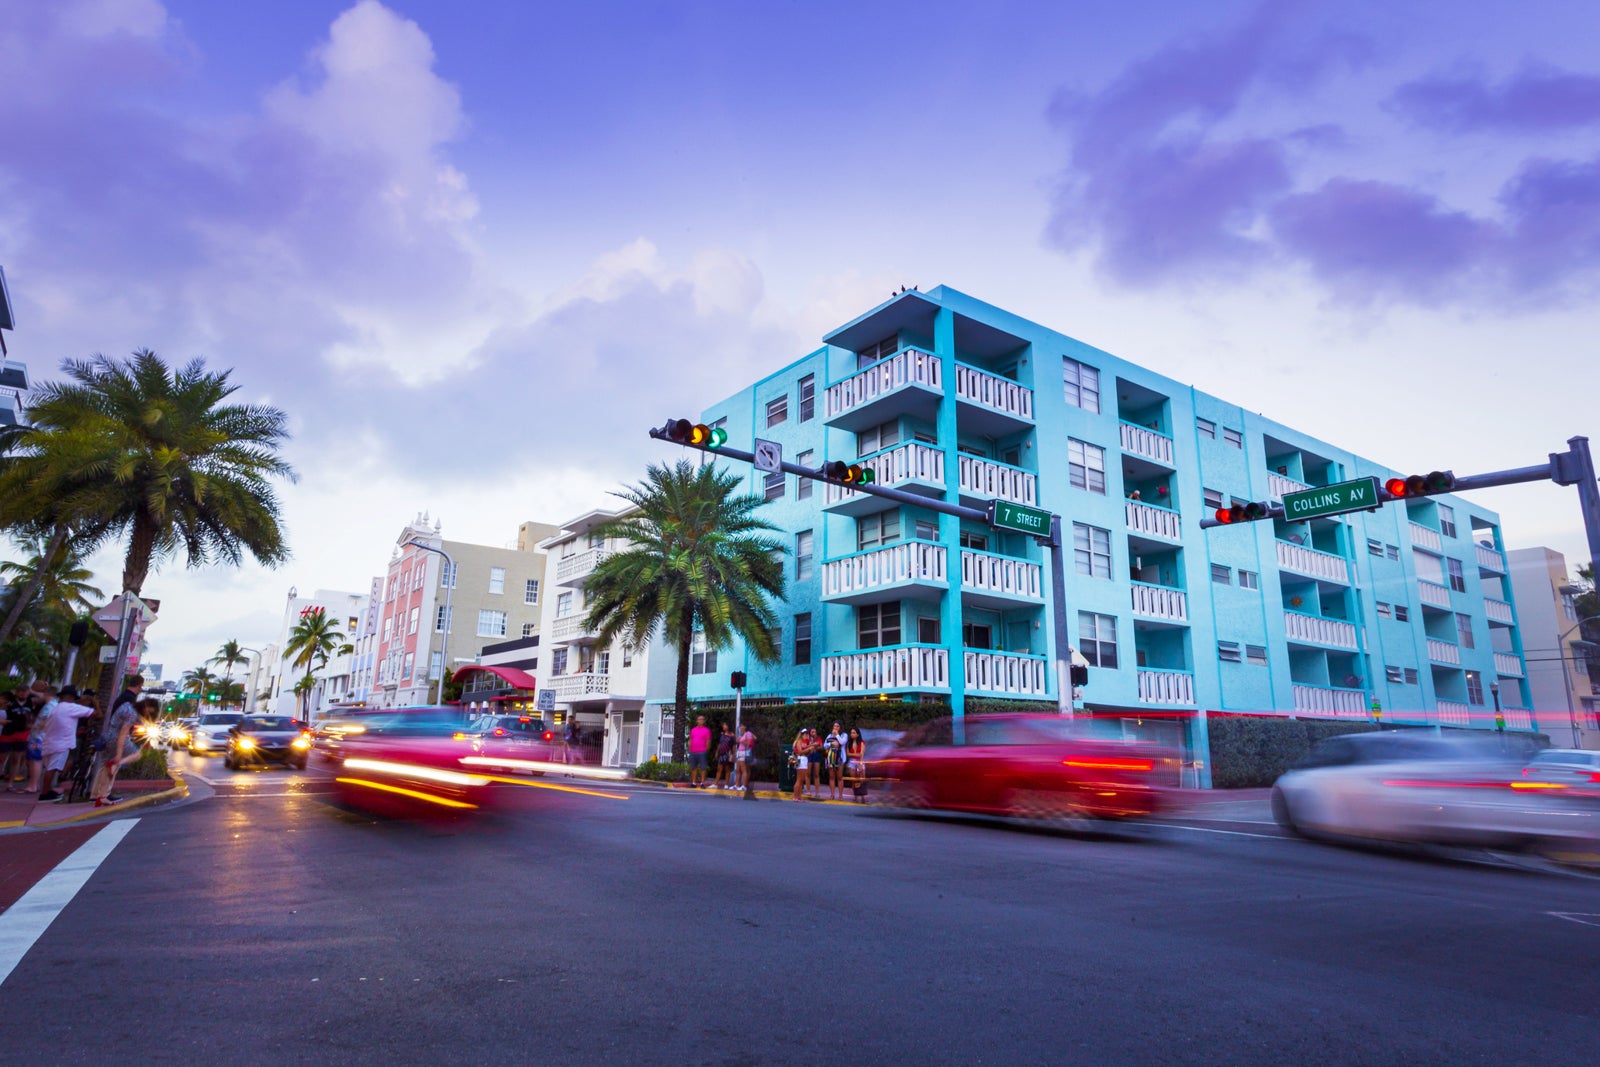 Ocean Drive daylight scene at South Beach, Miami, USA.